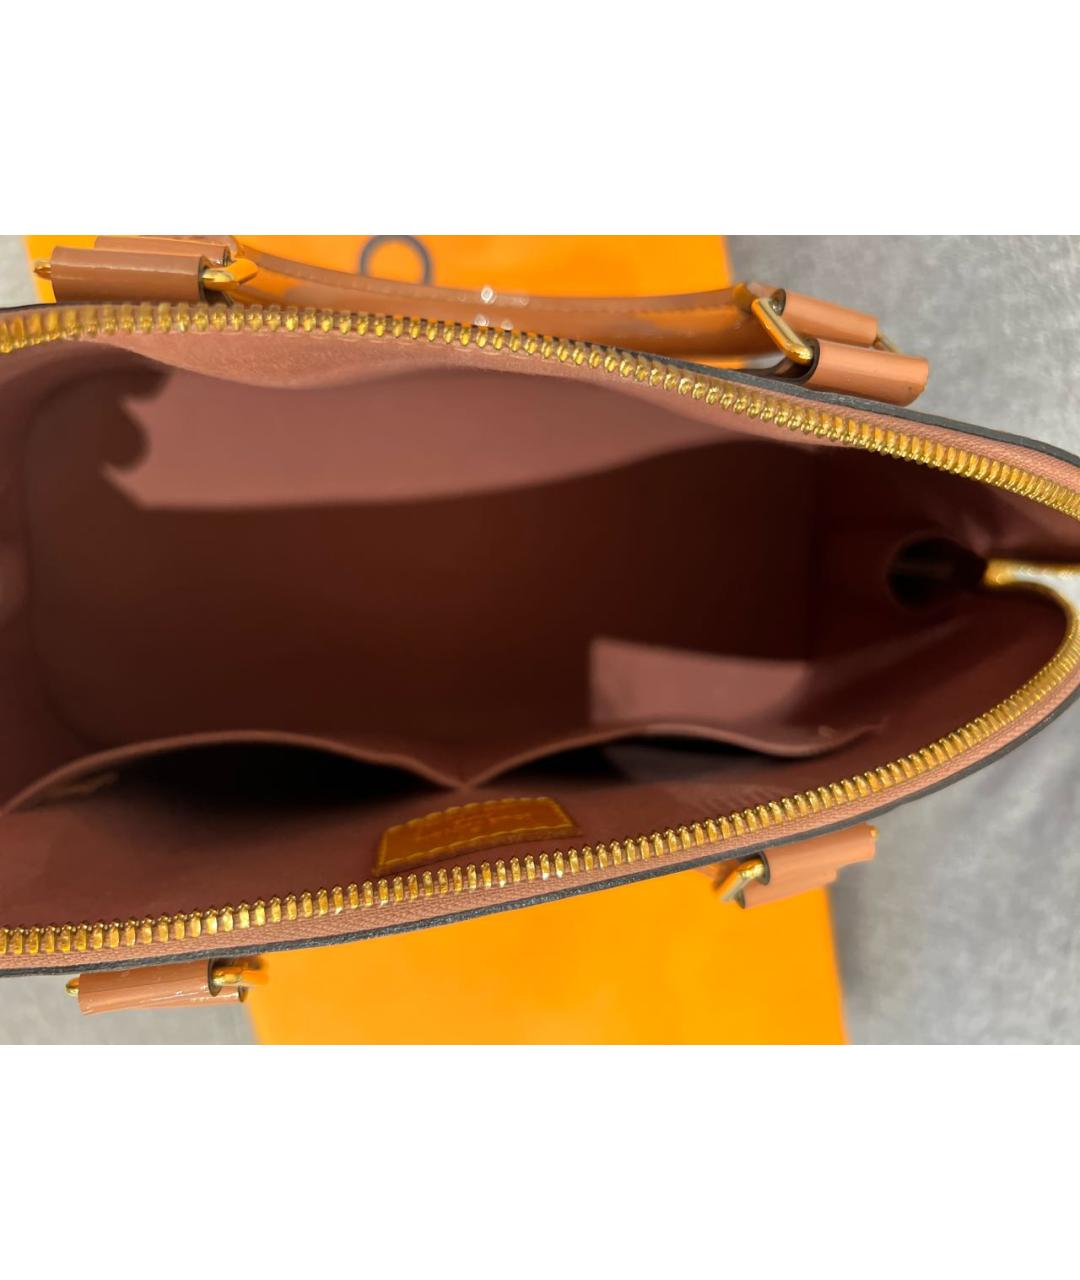 LOUIS VUITTON PRE-OWNED Бежевая сумка с короткими ручками из лакированной кожи, фото 4